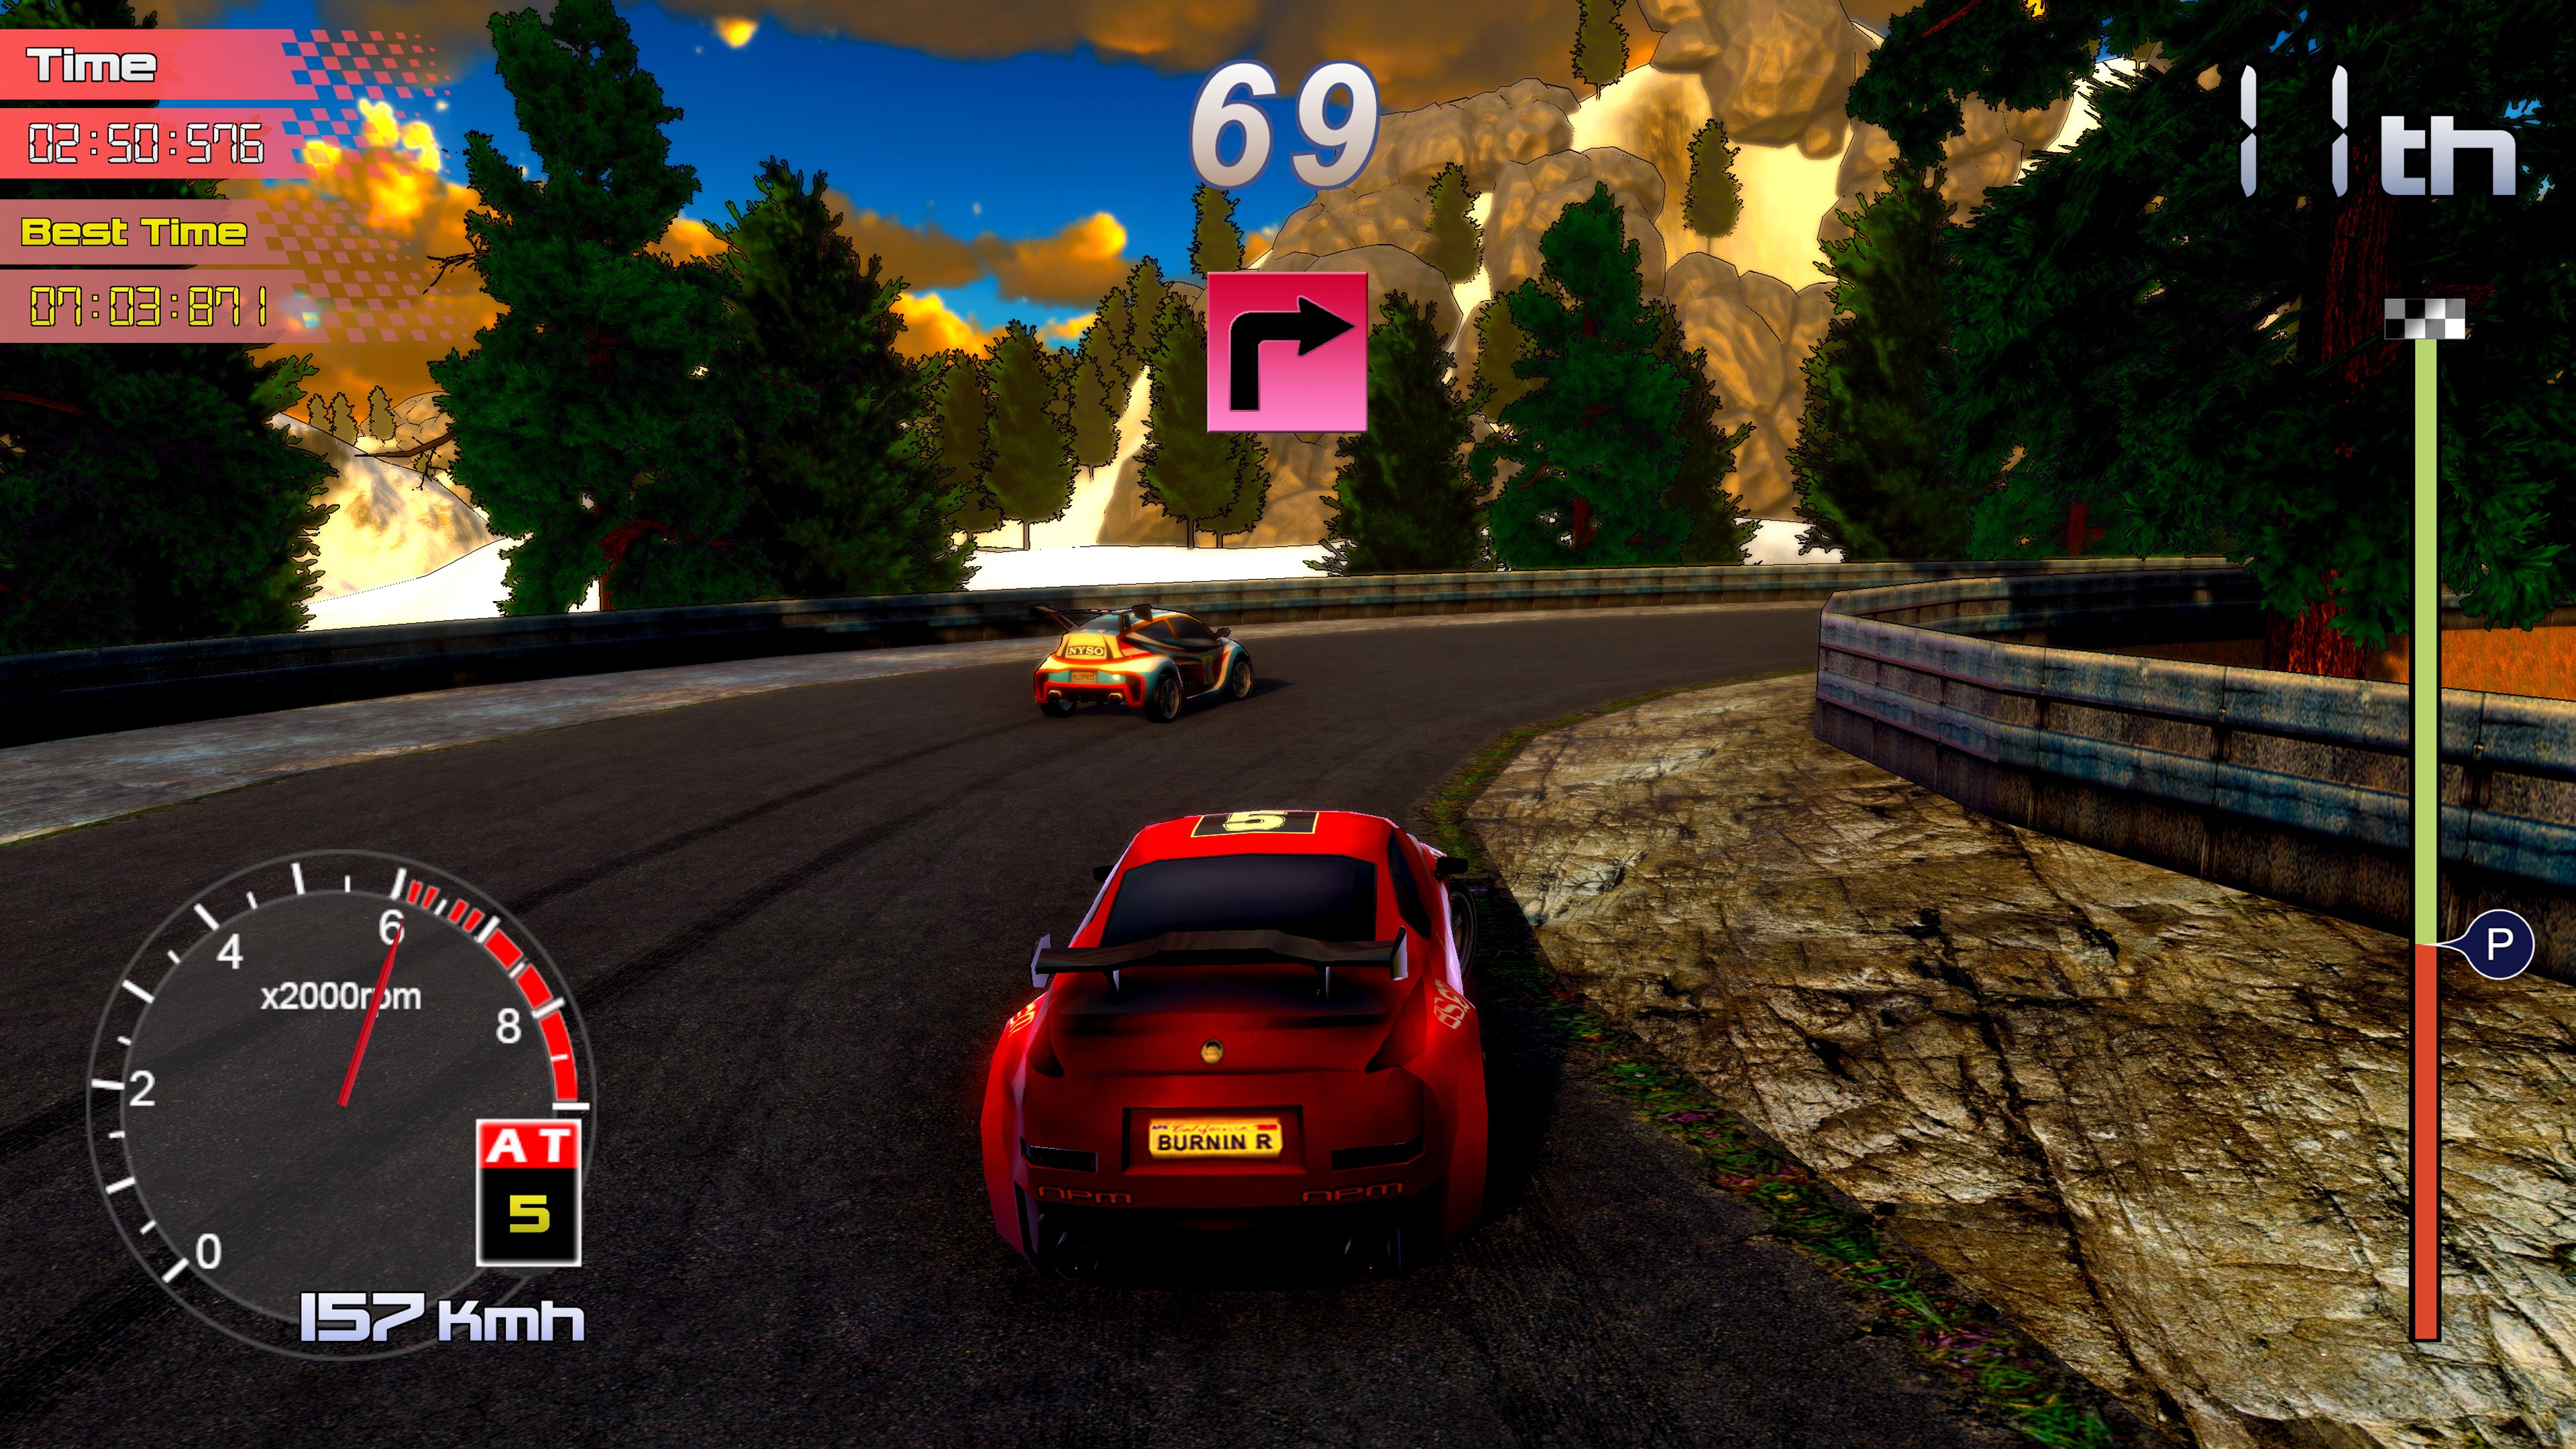 Rally Rock 'N Racing screenshot 53657